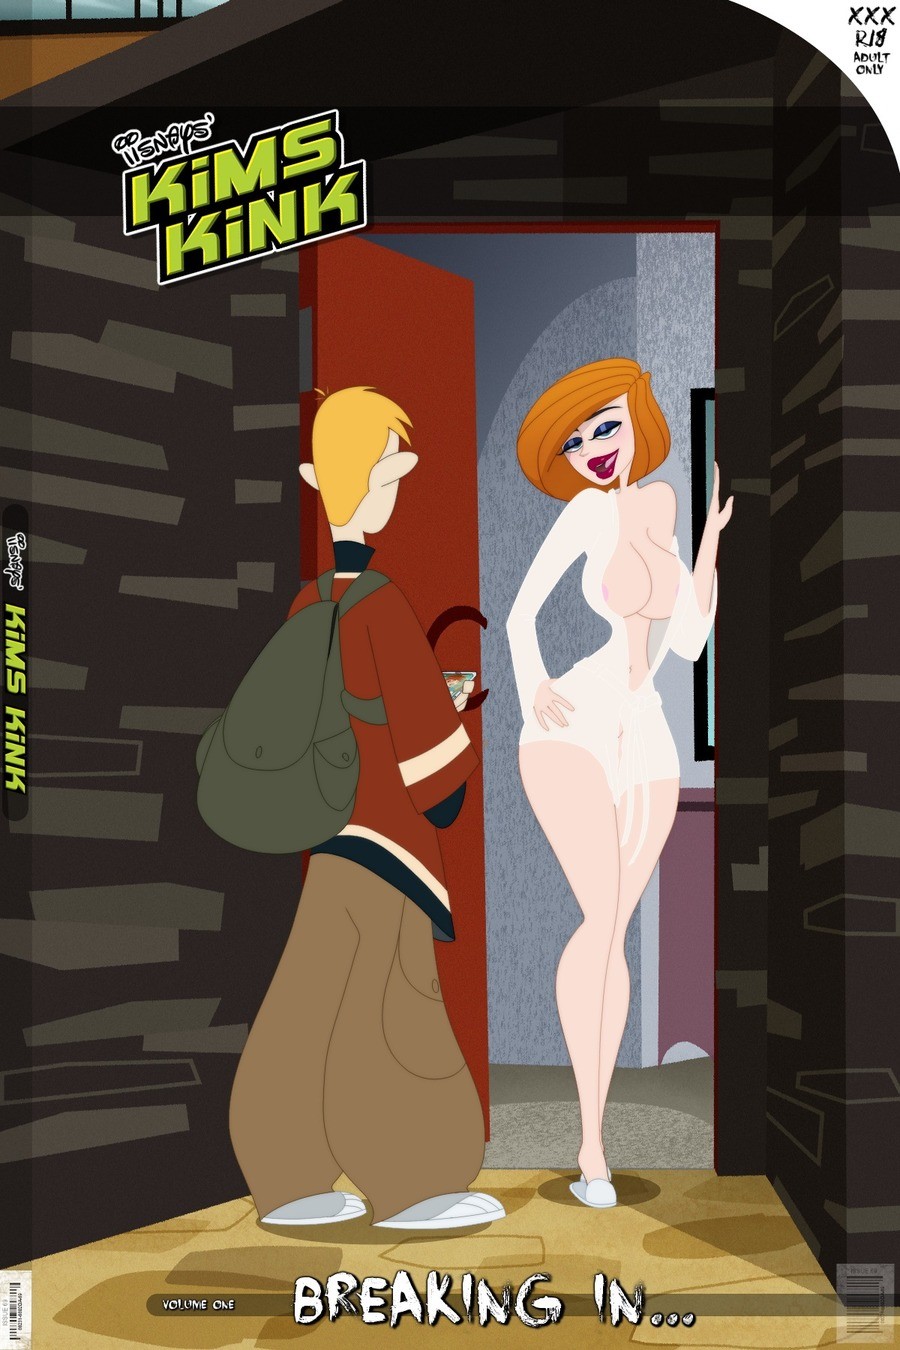 Anal Cartoon Sex Kim - Kim's Kink (Kim Possible) by Issue69 - Porn Cartoon Comics